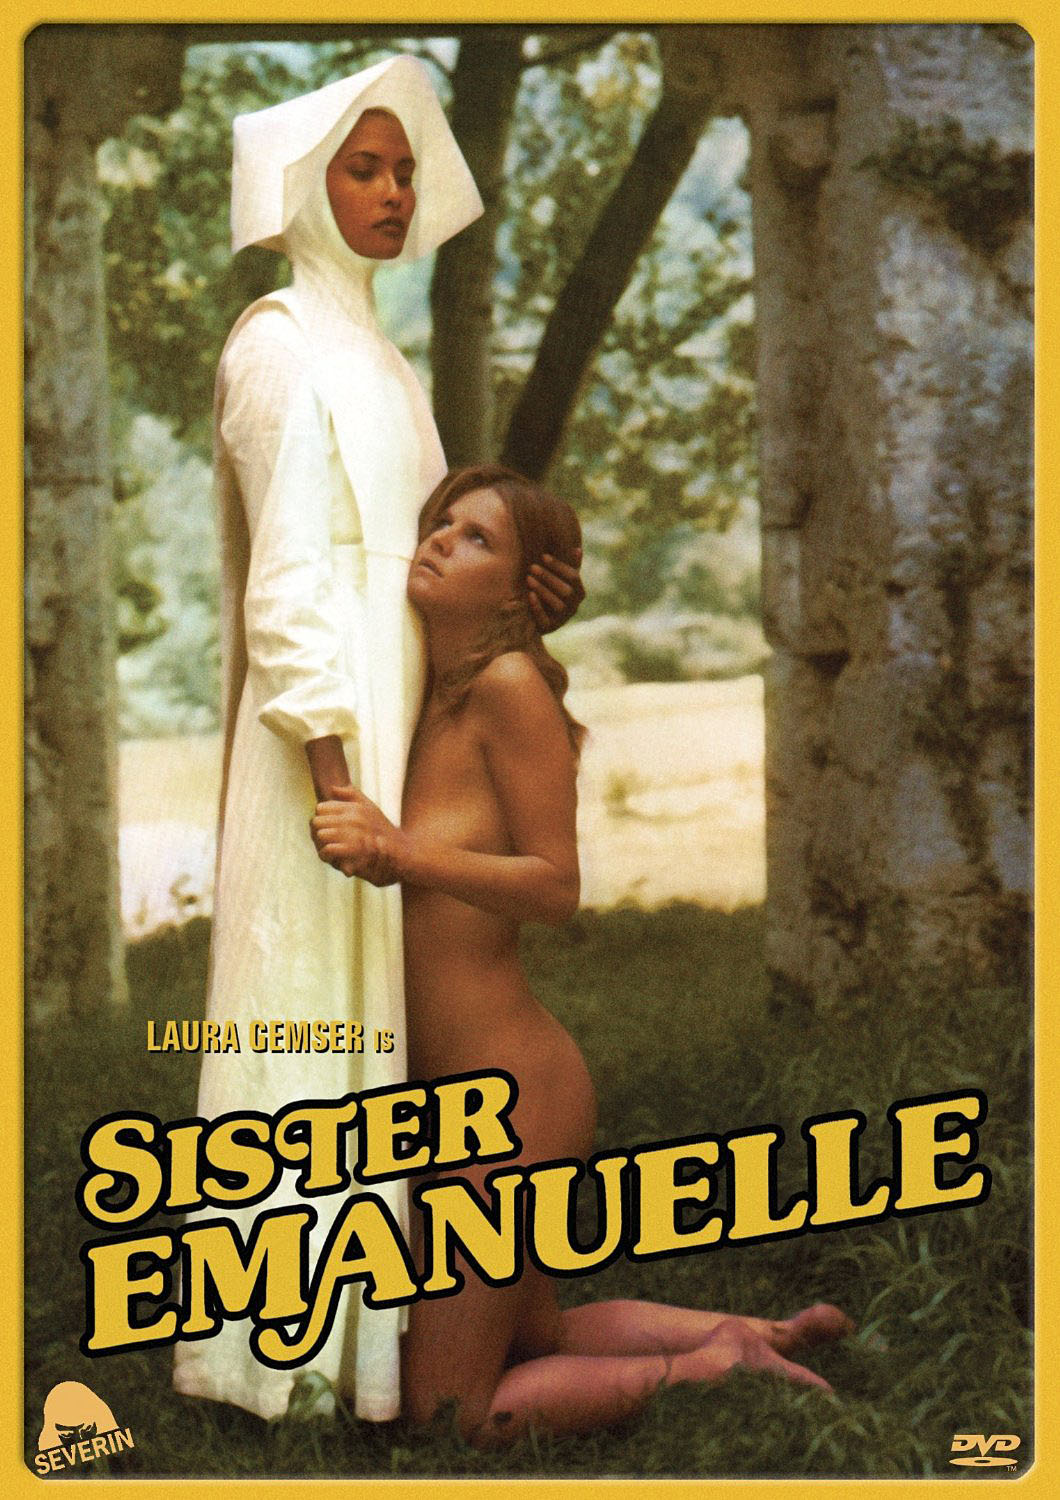 Sister Emanuelle: Suor Emanuelle (1977) - Original Poster - vintagepornfun.com